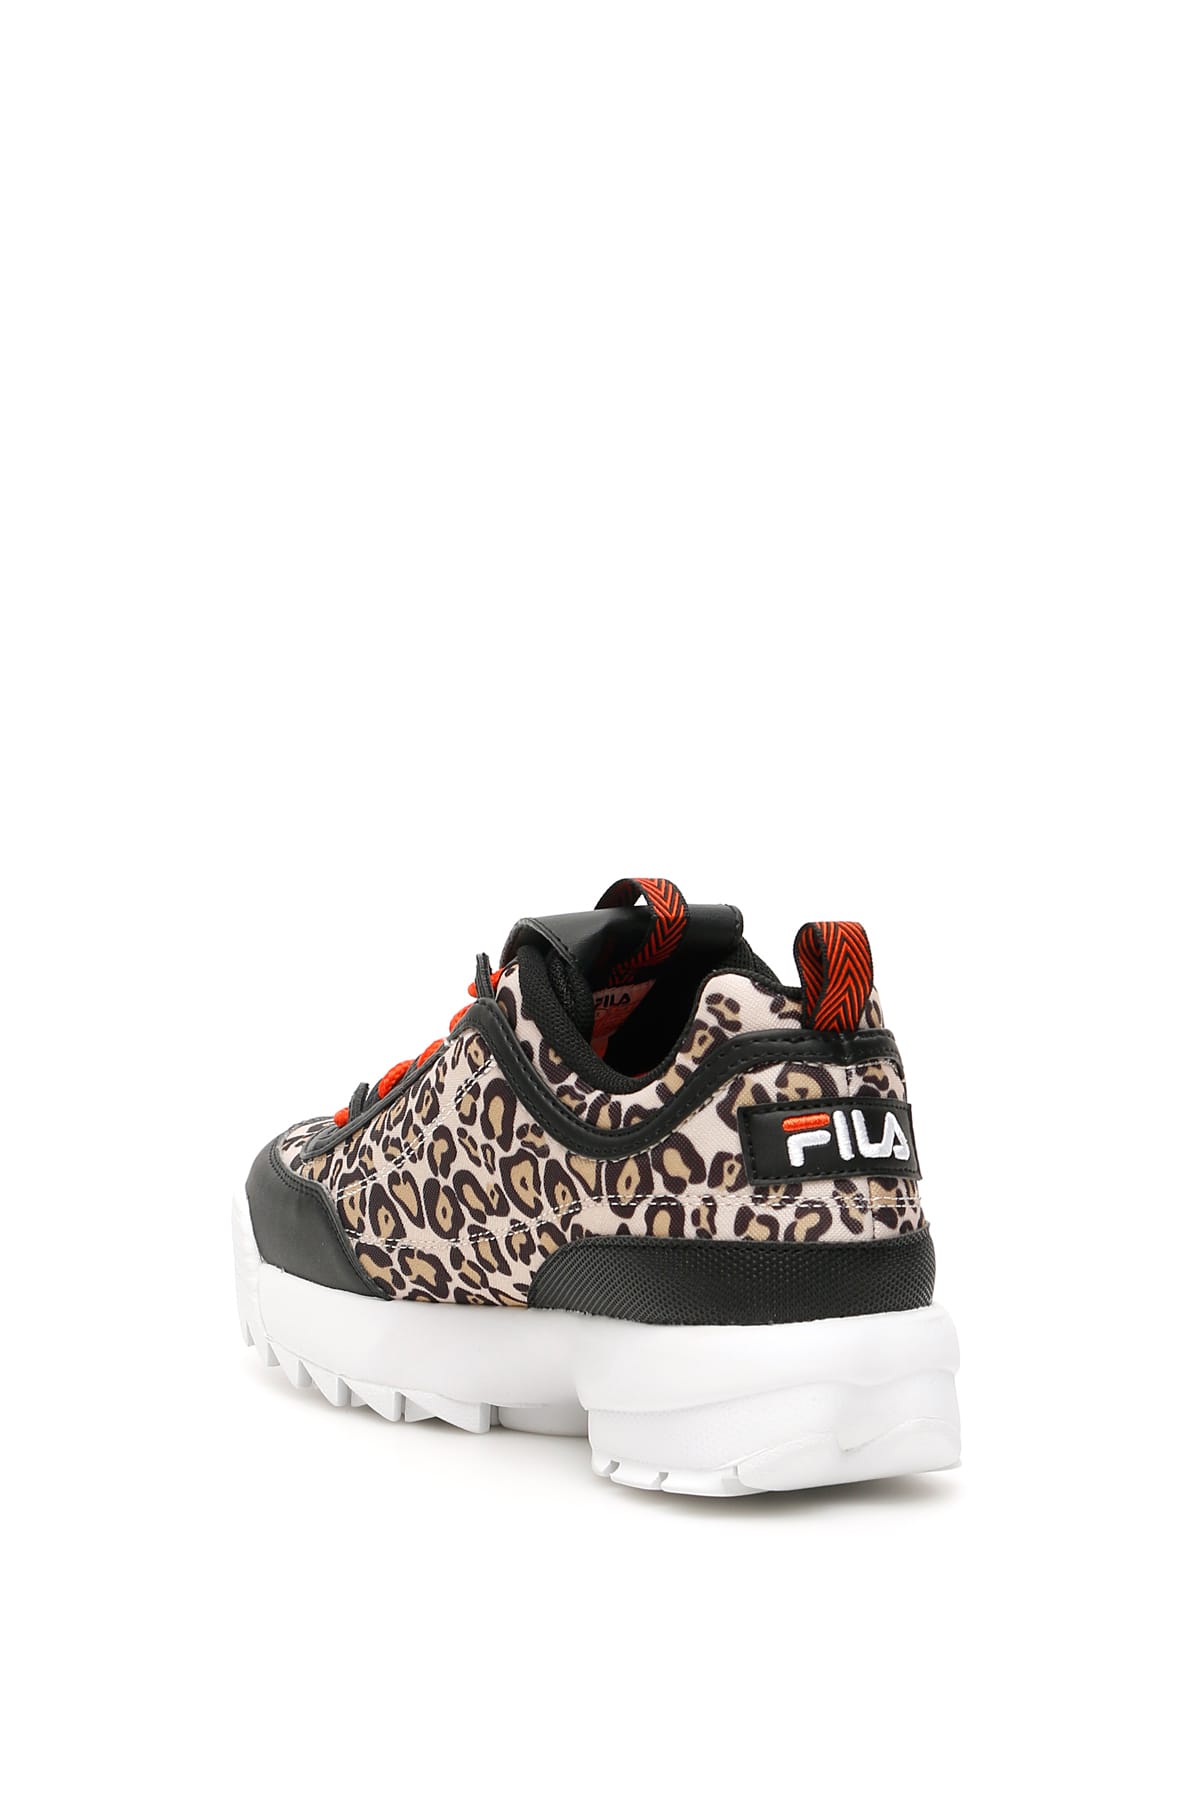 fila leopard shoes